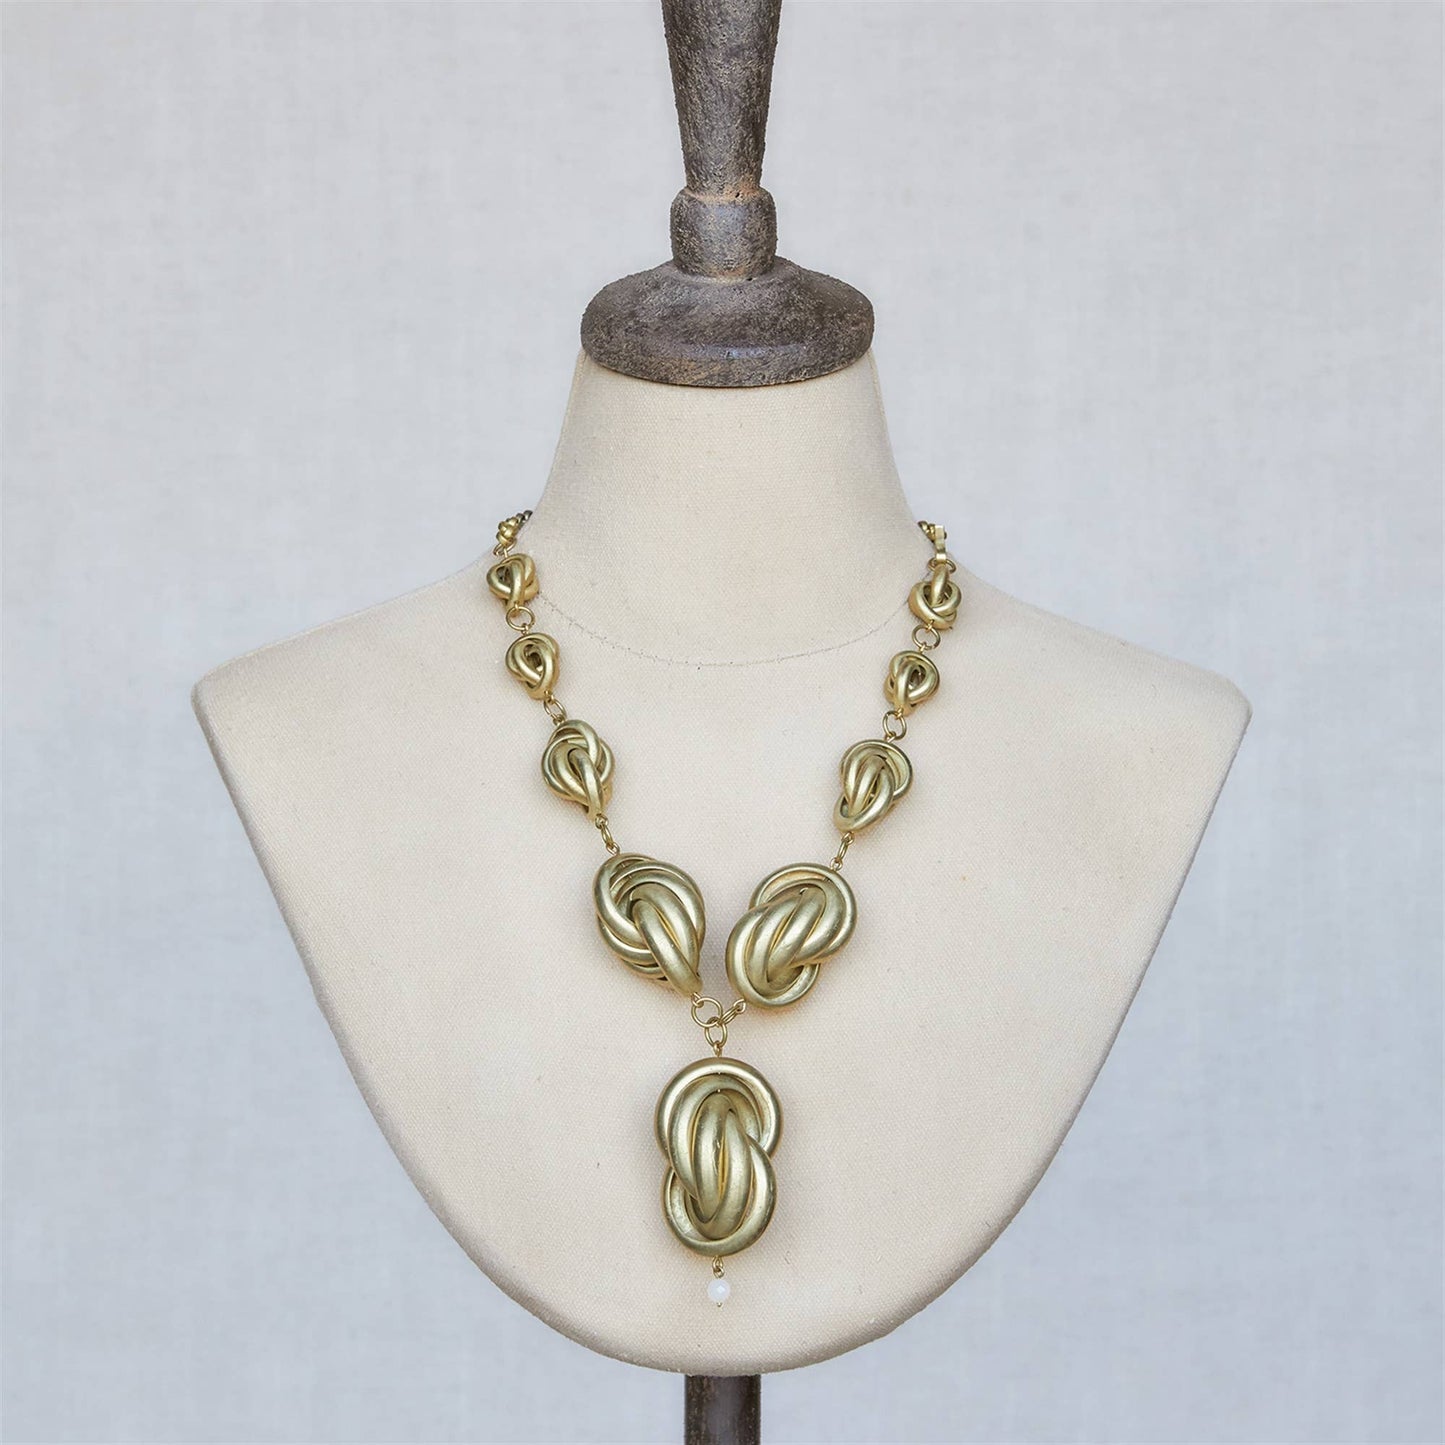 Julia Looped Necklace, Brass - Brass